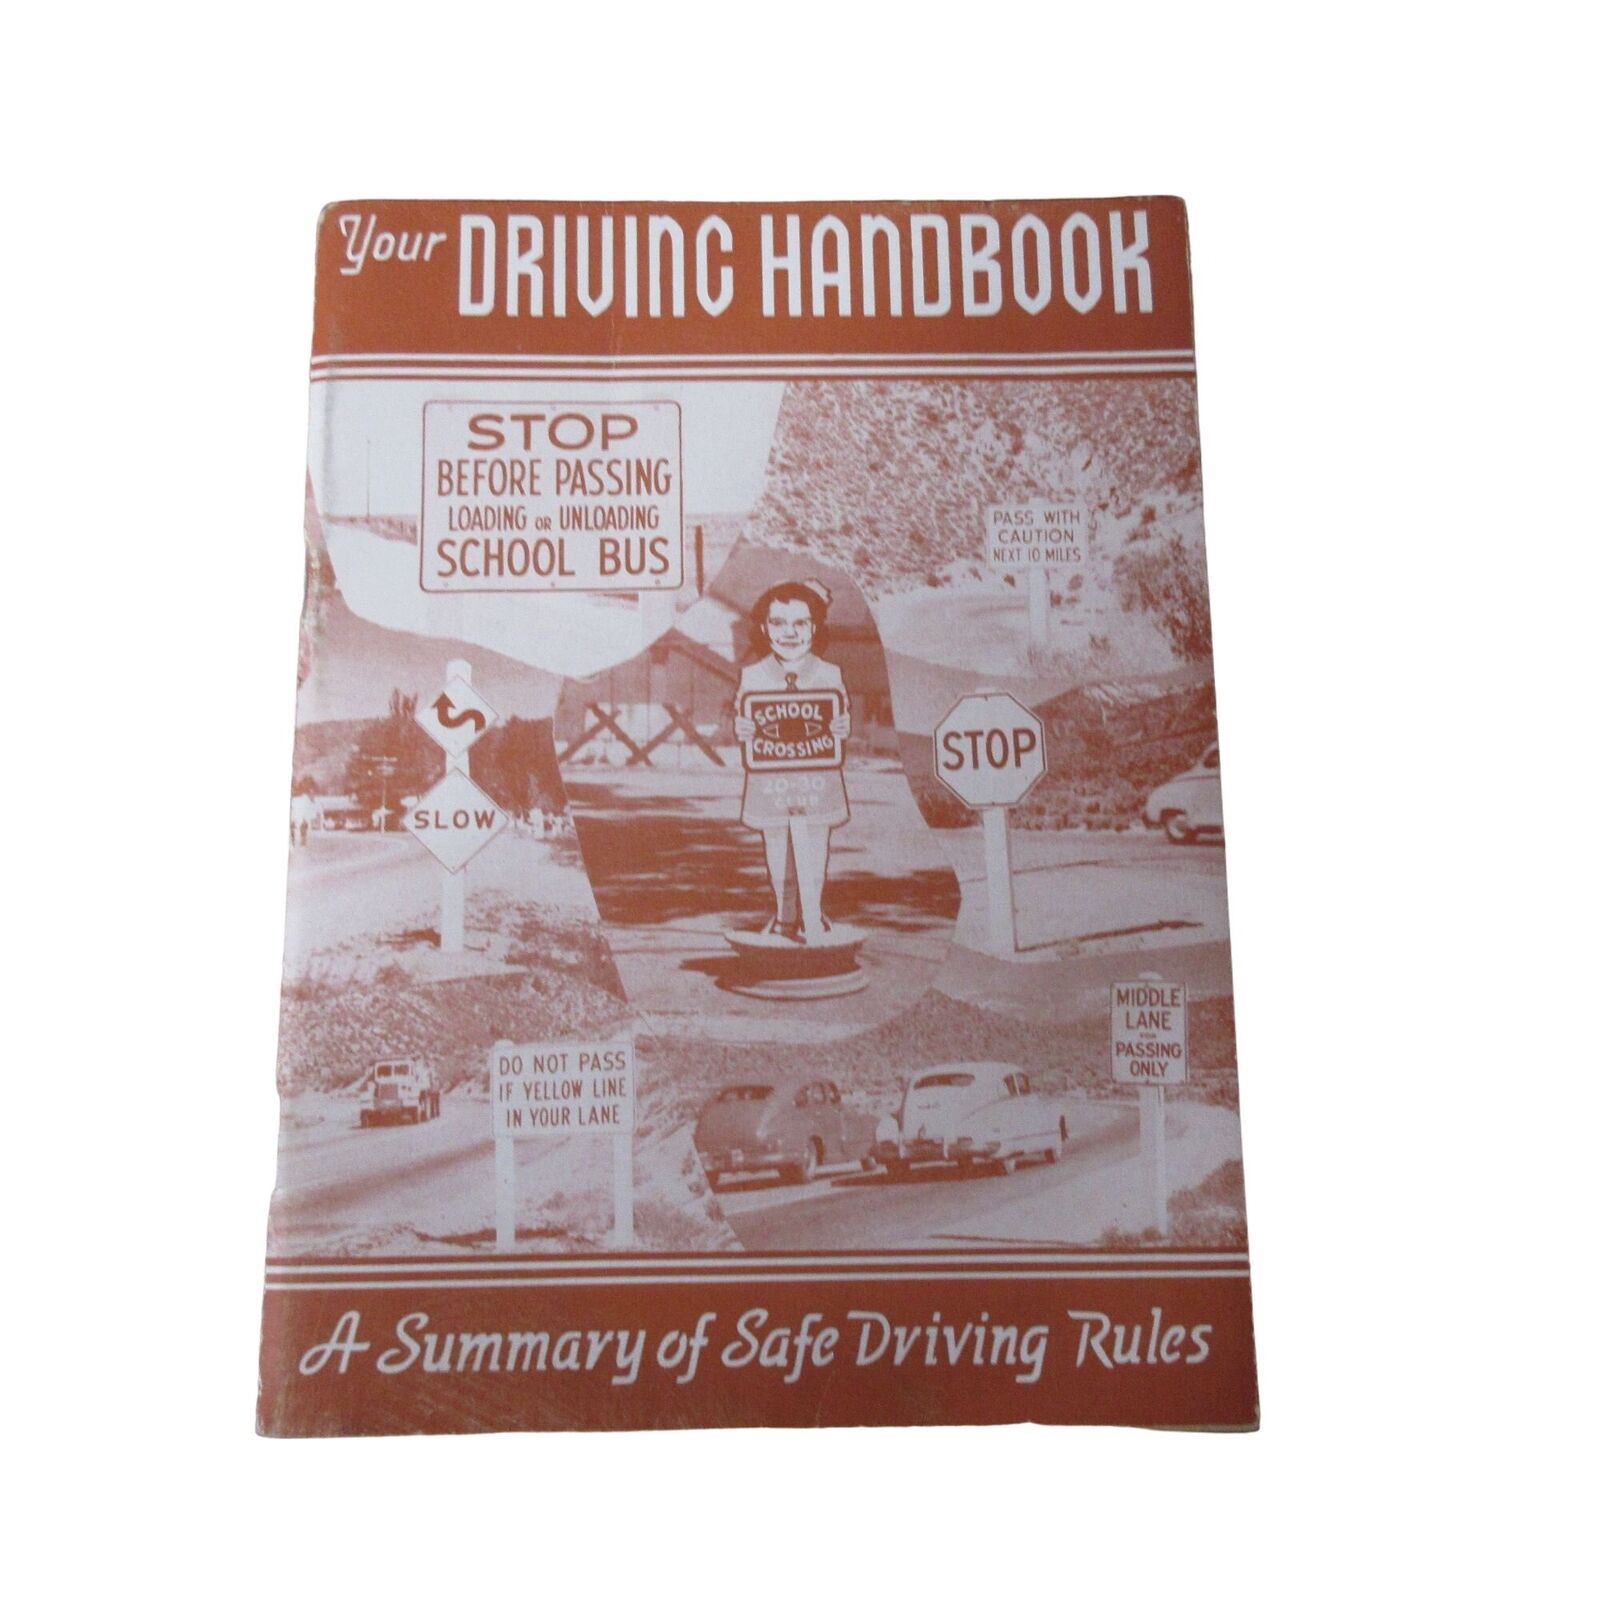 Your Driving Handbook - 1955 Nevada State DMV Driver's Handbook